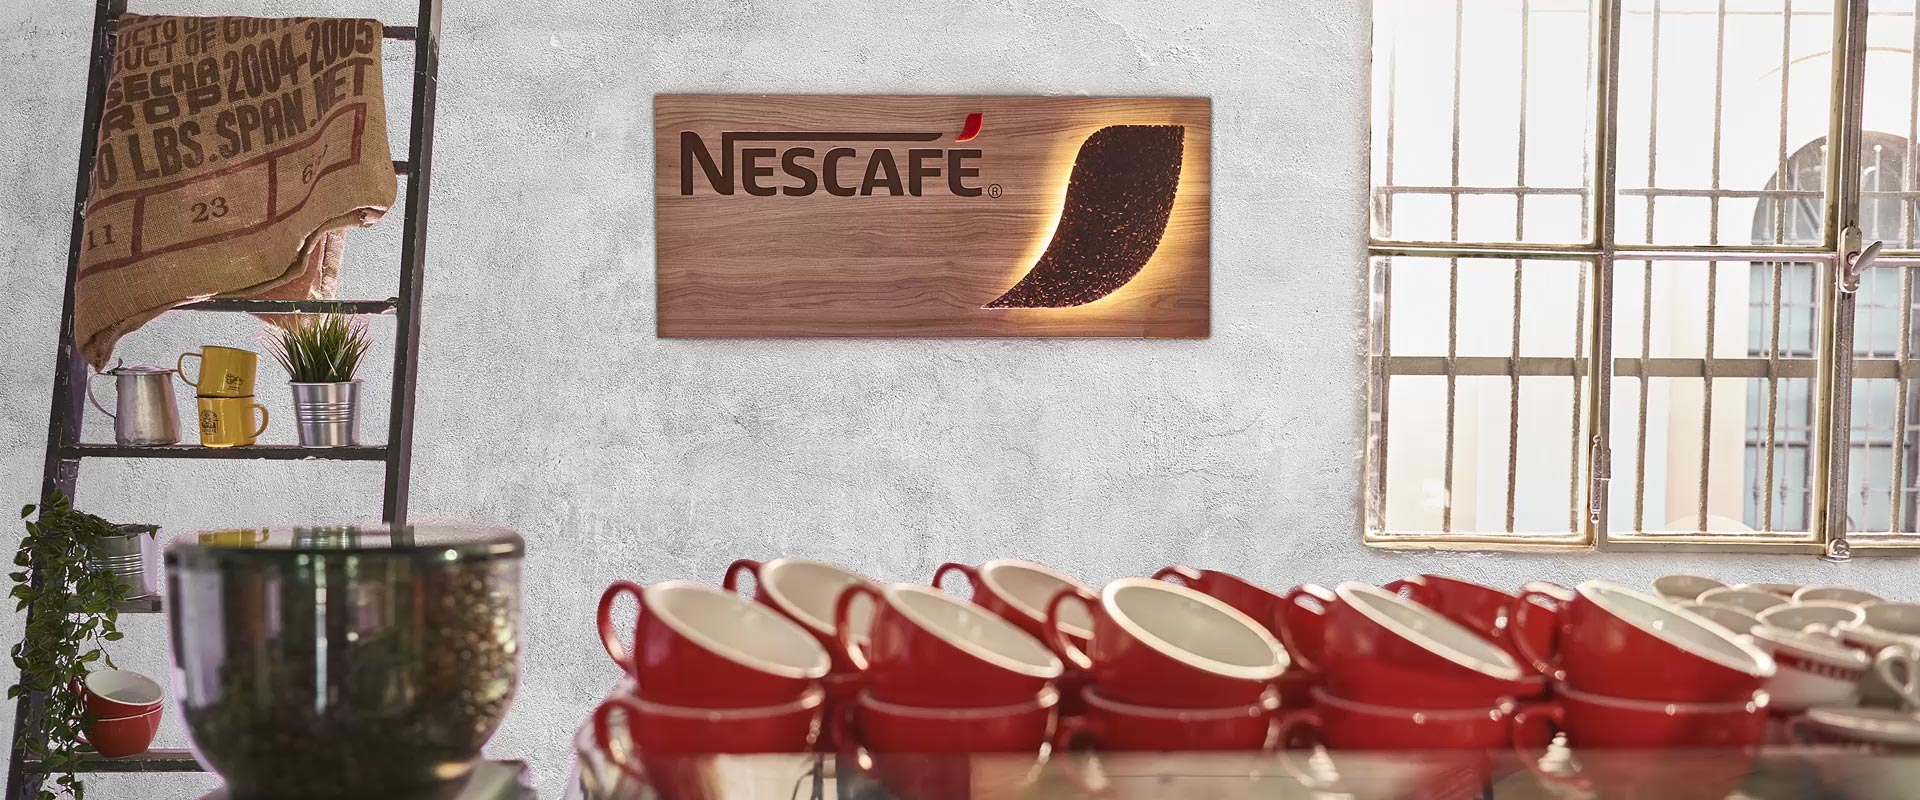 yourtotalcoffeepartner: B2B site for Nescafé beans launch project